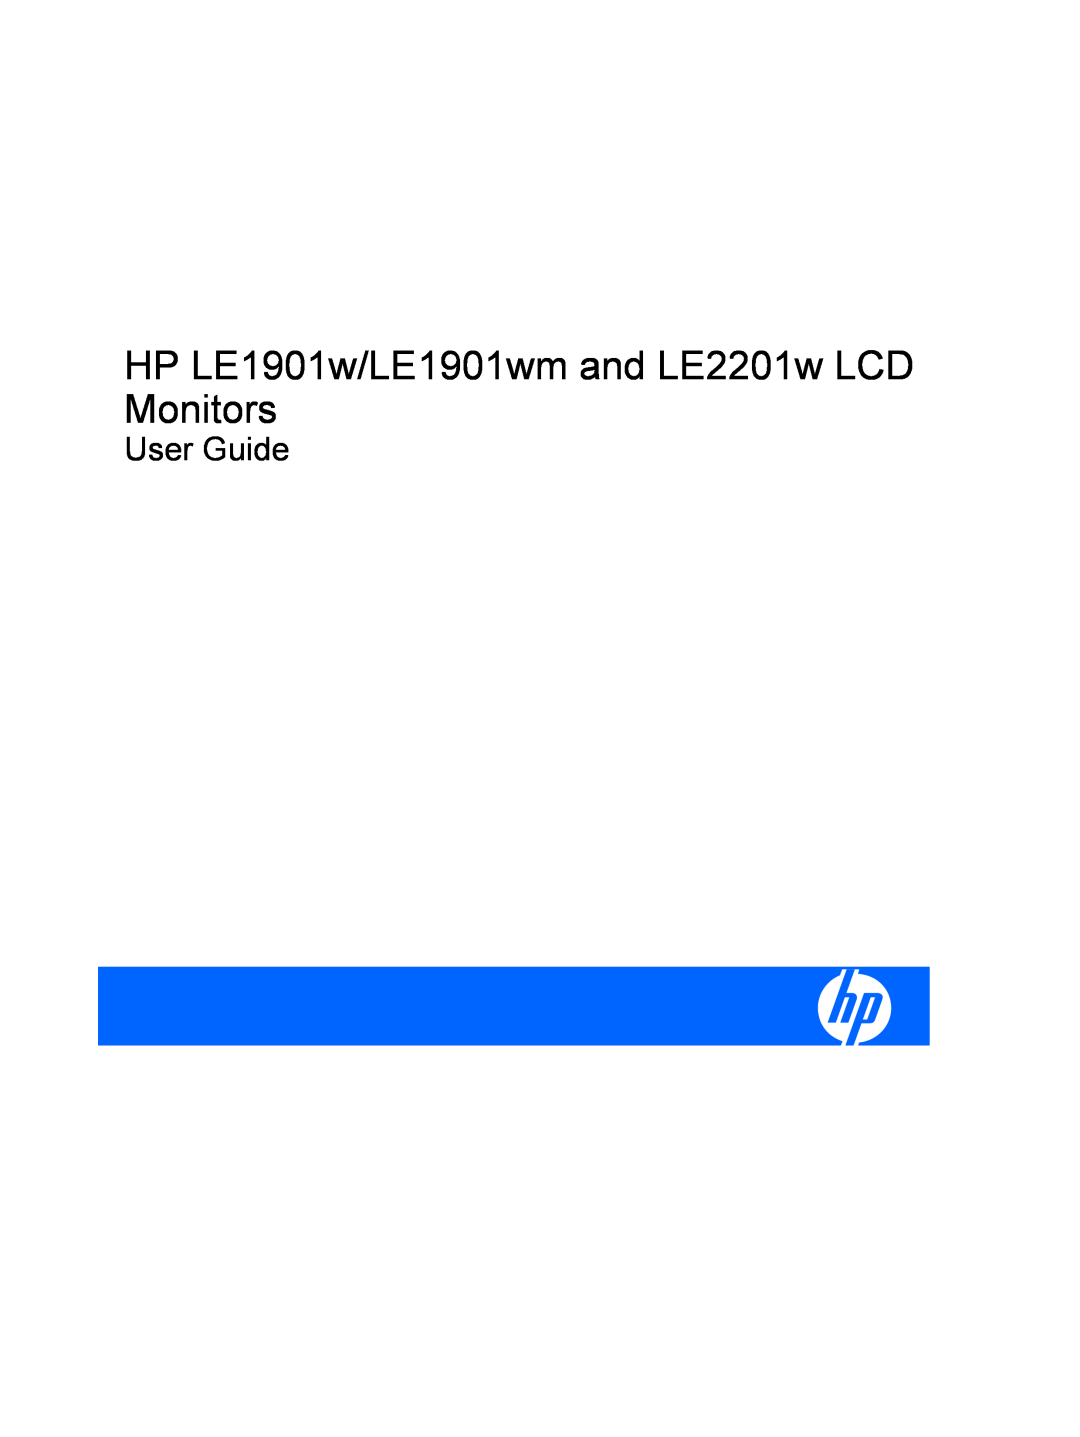 HP manual HP LE1901w/LE1901wm and LE2201w LCD Monitors, User Guide 